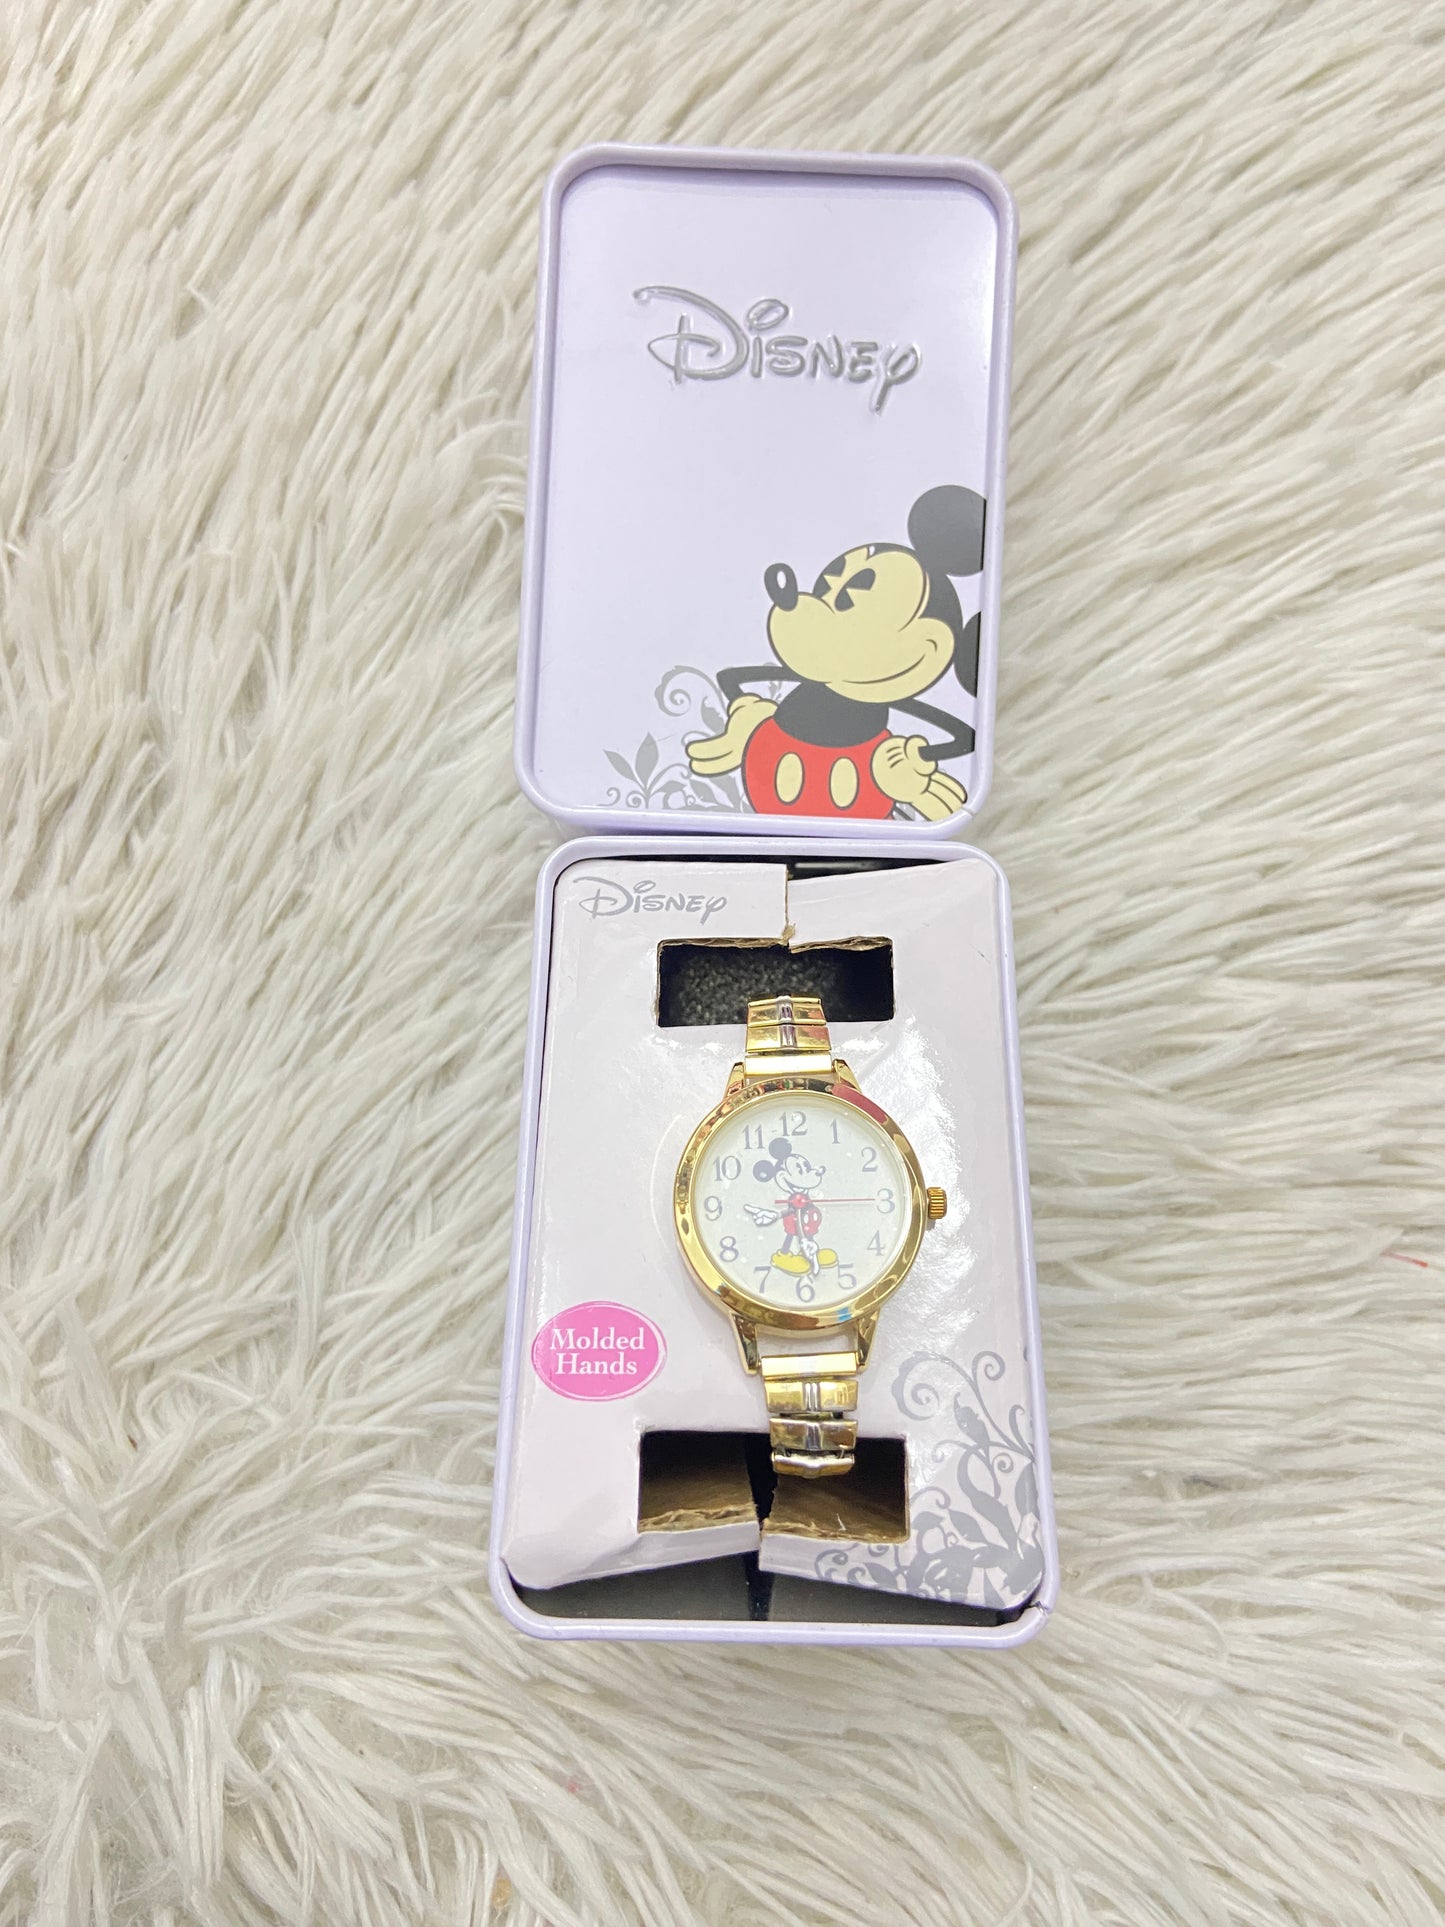 Reloj Disney original con Mikey mouse de fondo en dorado.